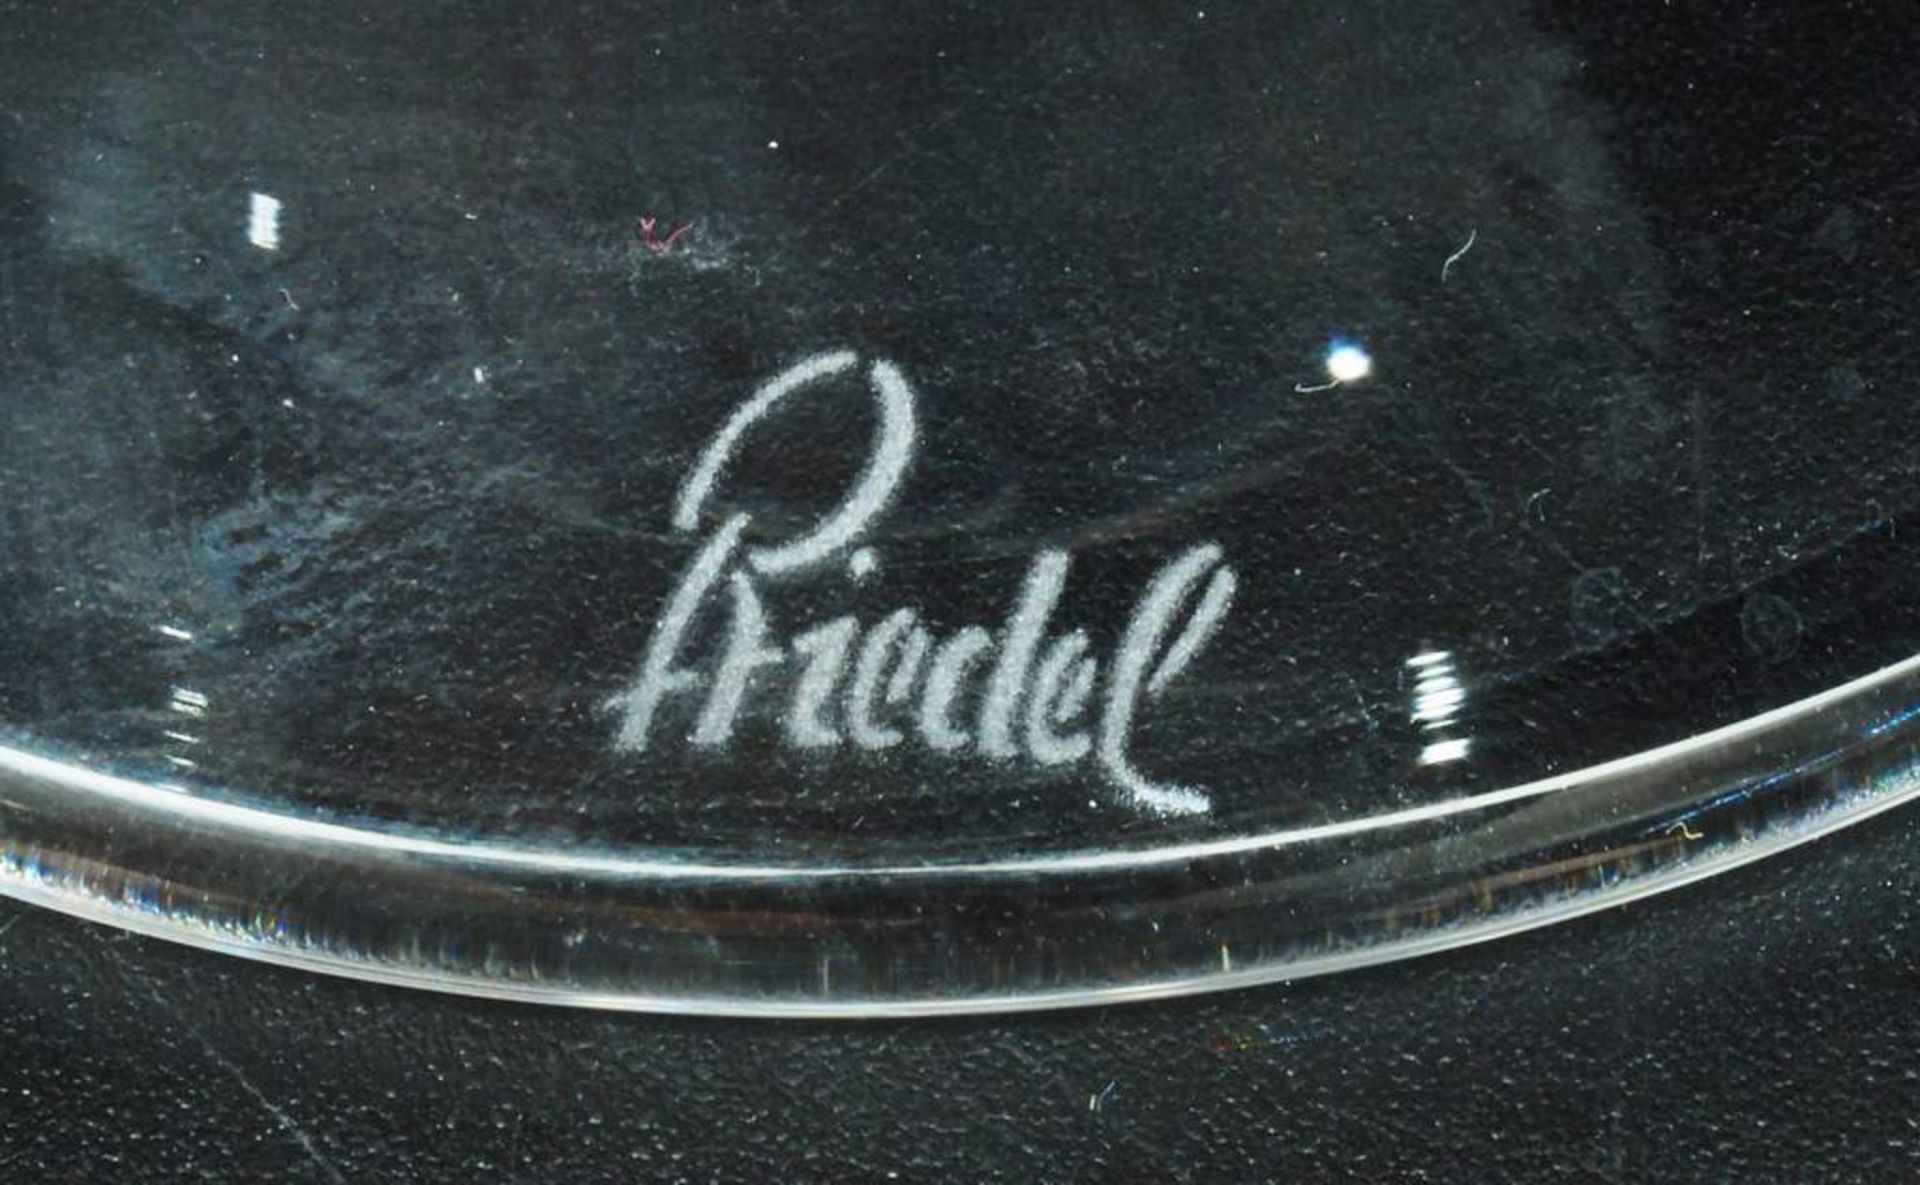 RIEDEL Trinkglas-Konvolut, Modell "Sommeliers", insgesamt 41 Stück. - Image 10 of 11